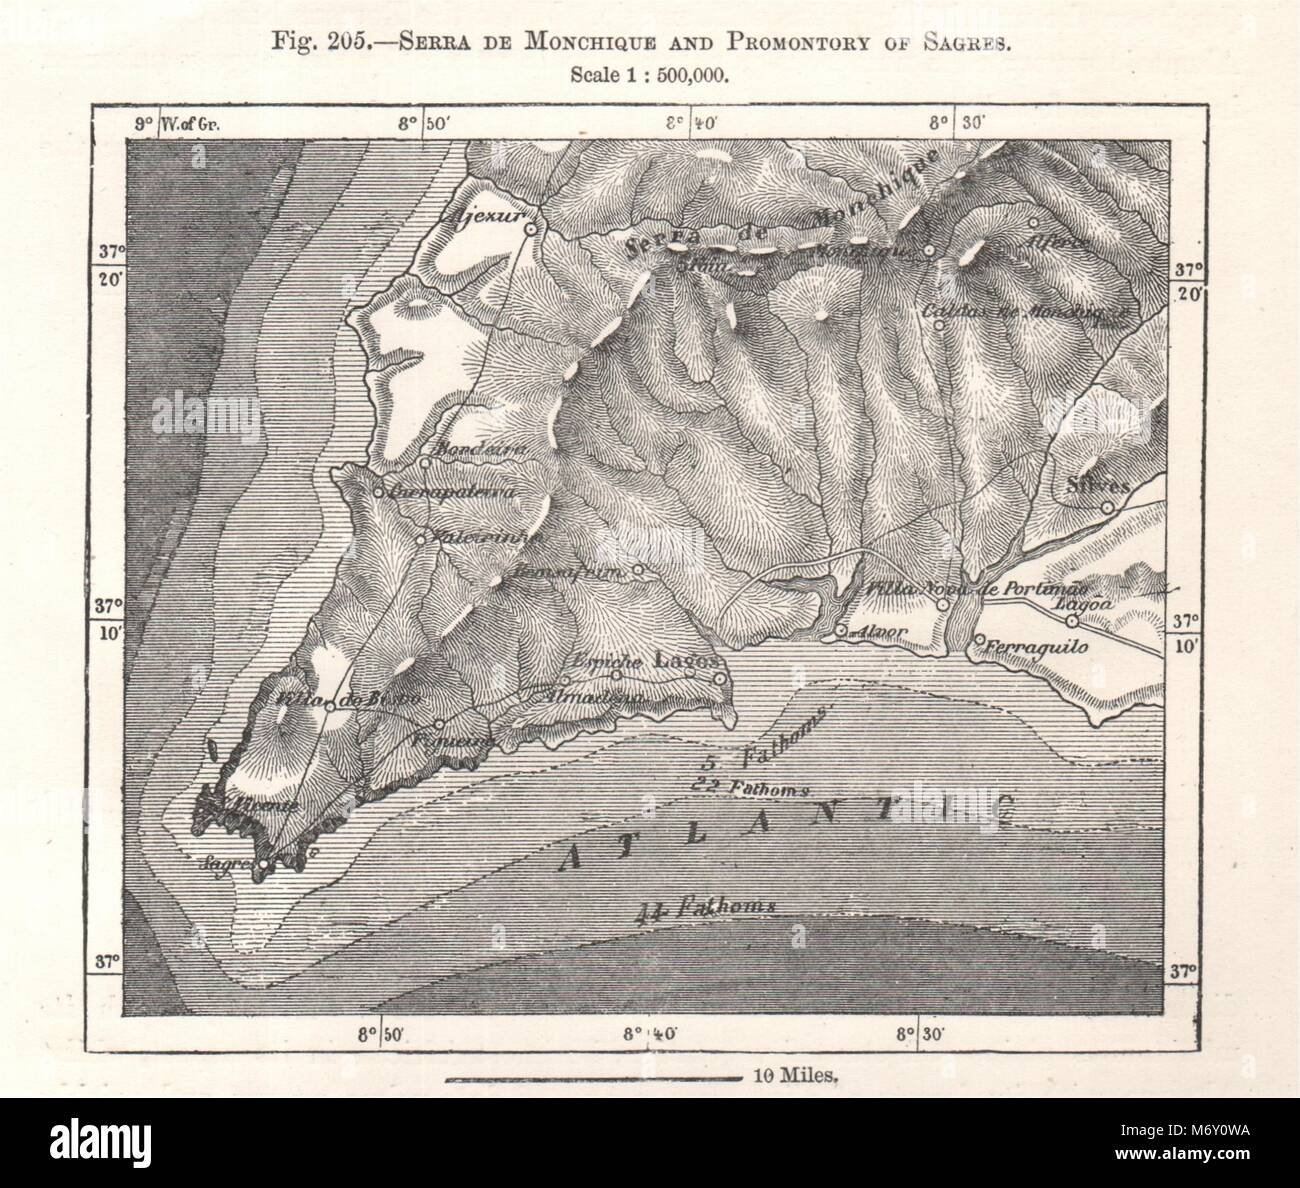 Serra de Monchique & Sagres Promontory. Lagos Algarve Portugal. Sketch map 1885 Stock Photo